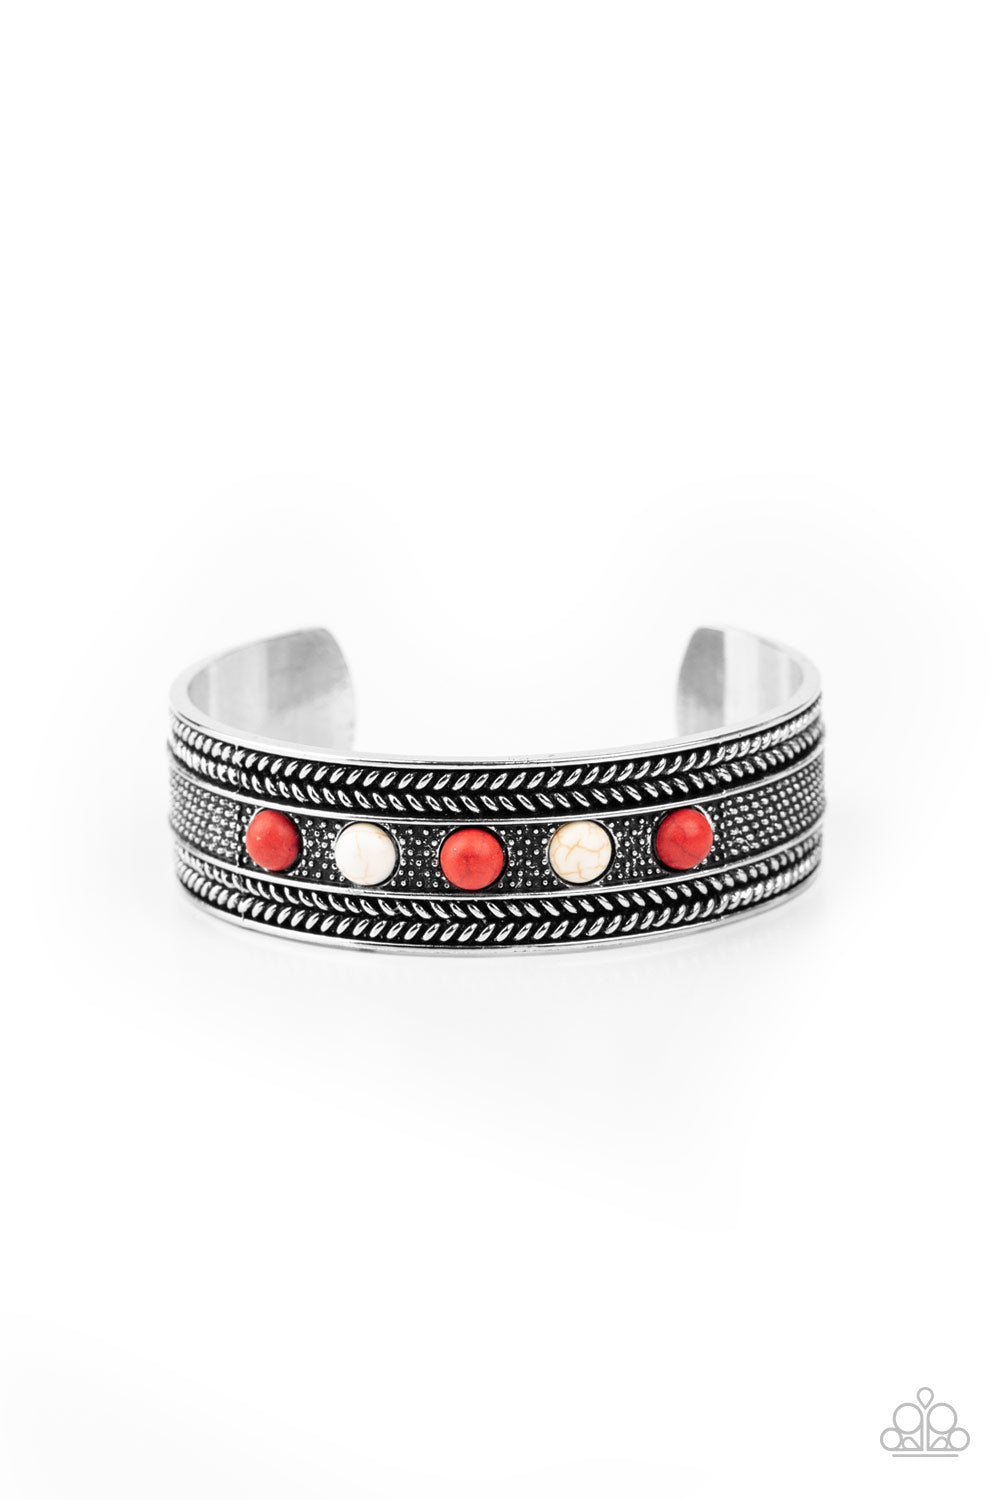 Quarry Quake - Red Bracelet - Paparazzi Accessories - Alies Bling Bar